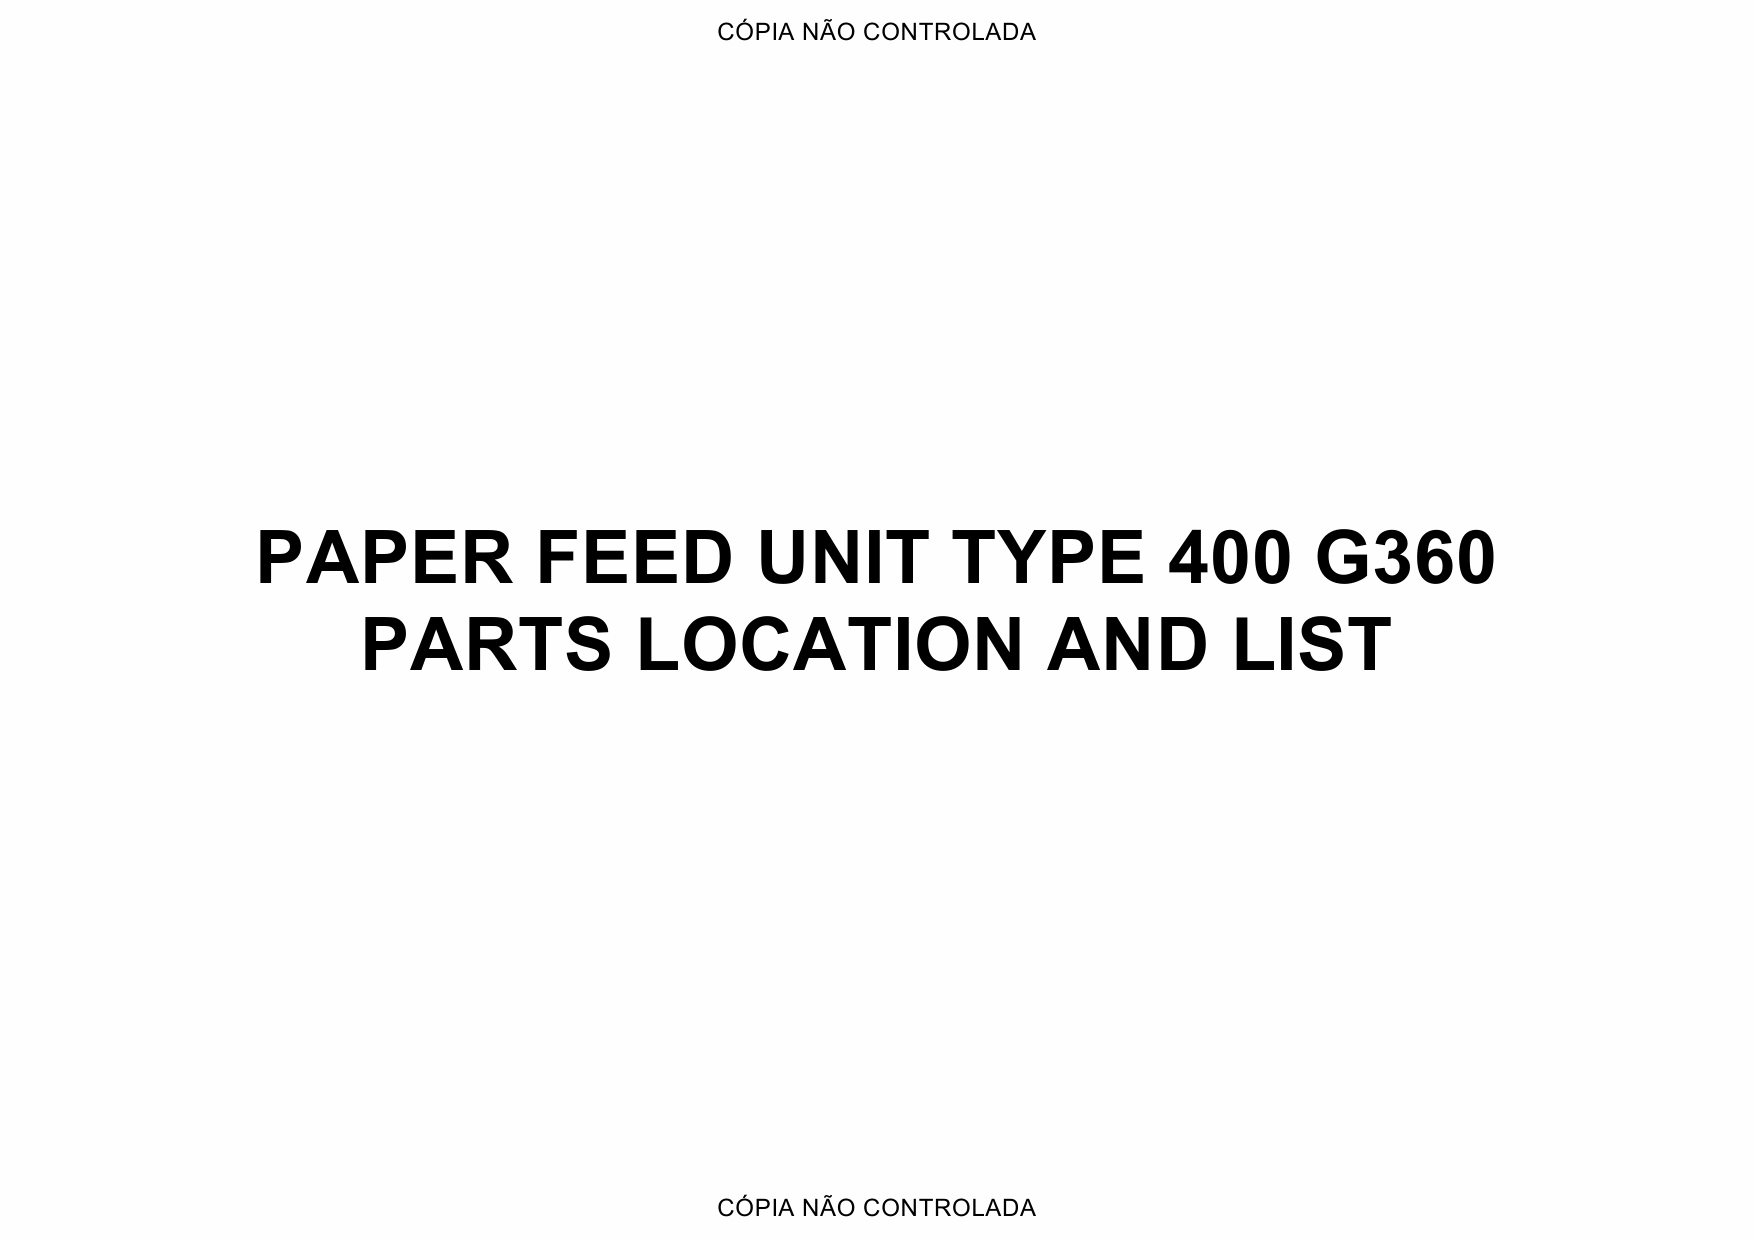 RICOH Options G360 PAPER-FEED-UNIT Parts Catalog PDF download-1